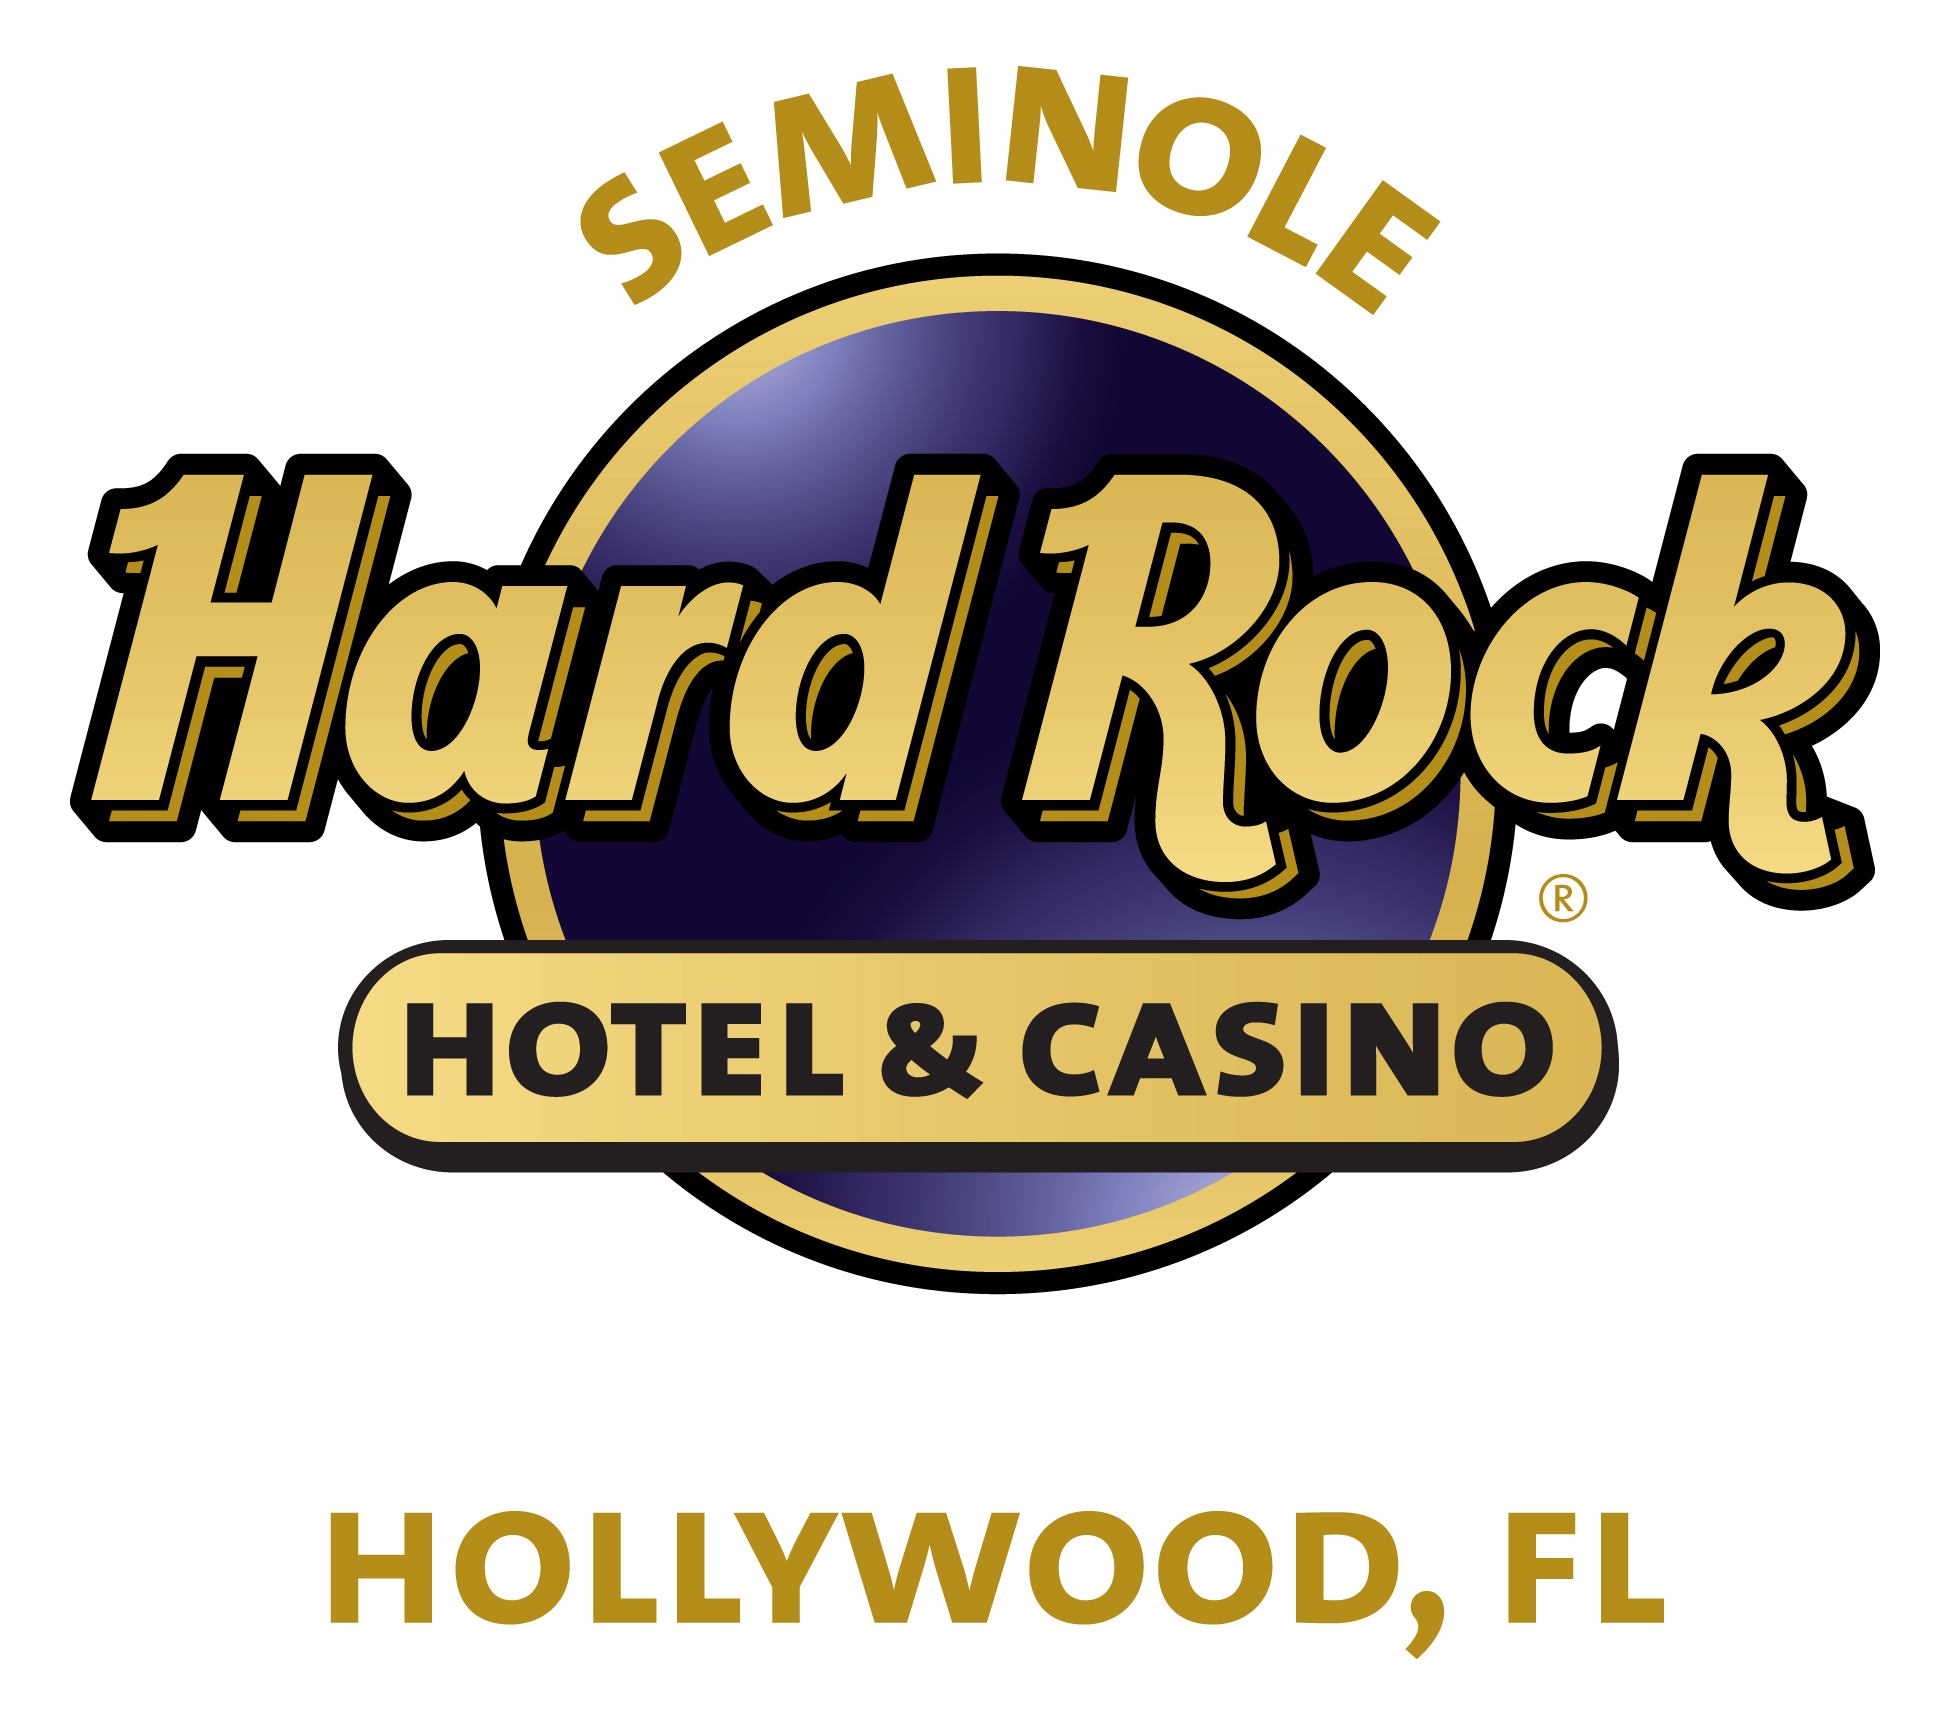 hard rock casino hollywood fl reservations